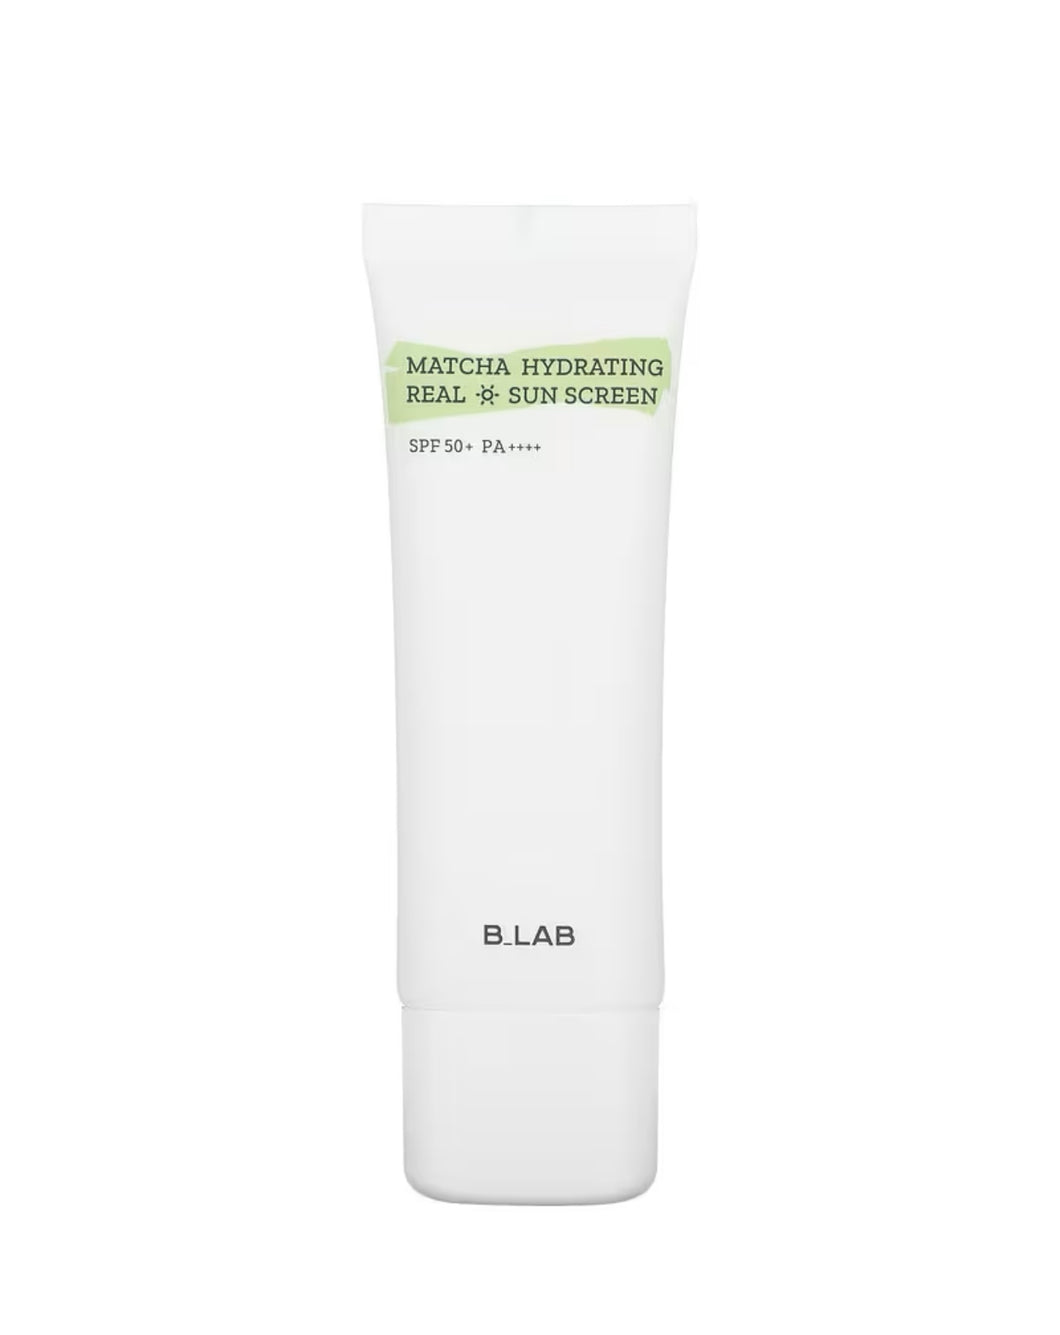 B_Lab, Matcha Hydrating, Real Sunscreen, SPF 50+ PA++++, 1.69 fl oz (50 ml)